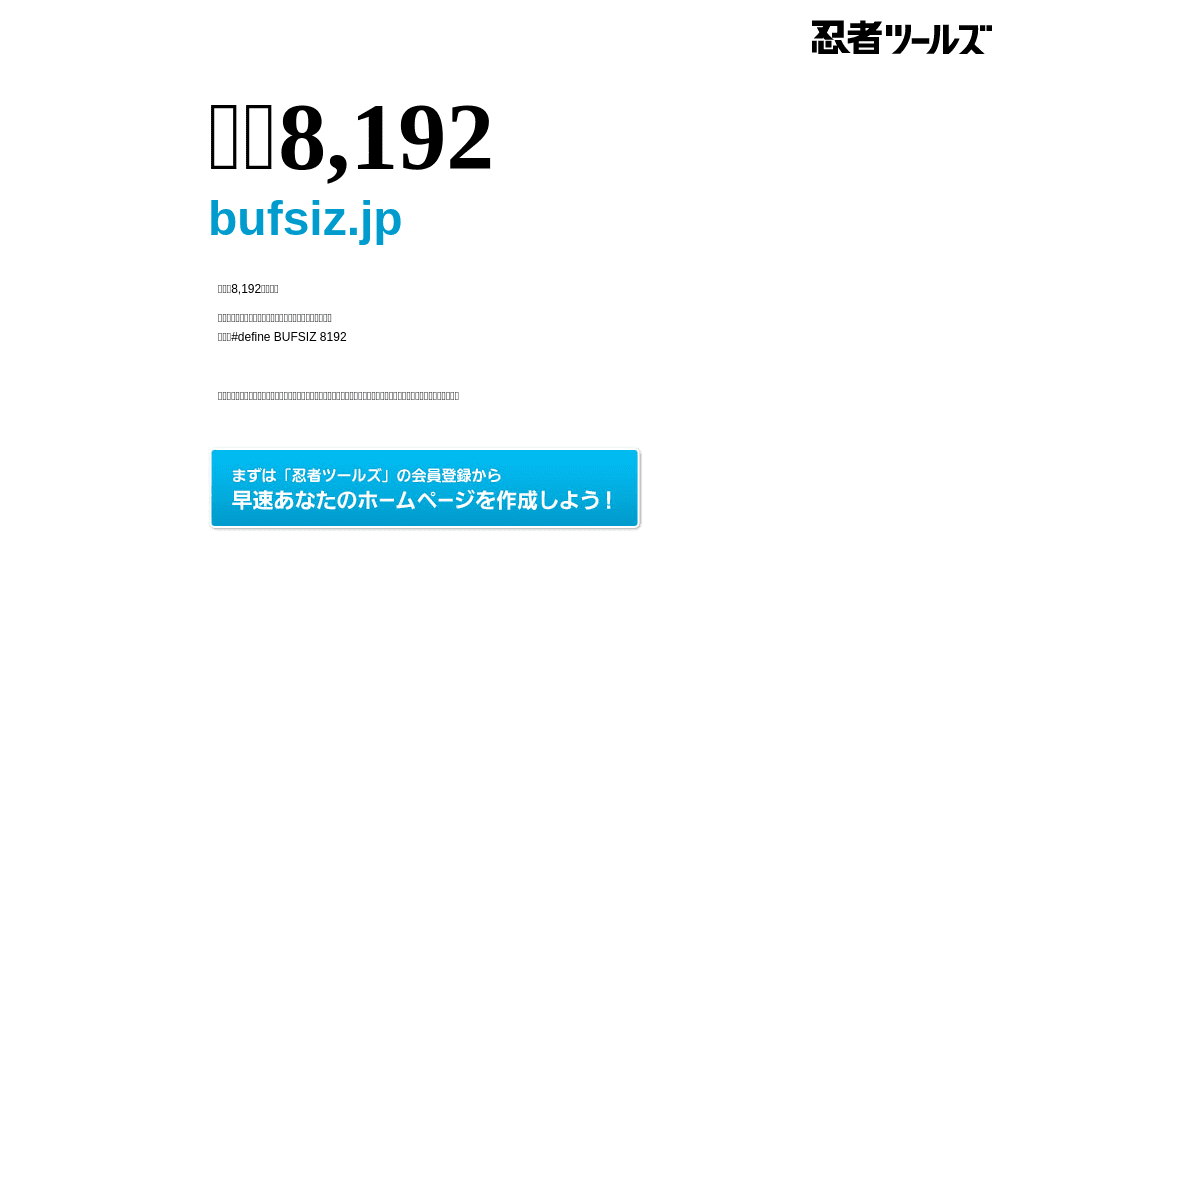 A complete backup of https://bufsiz.jp